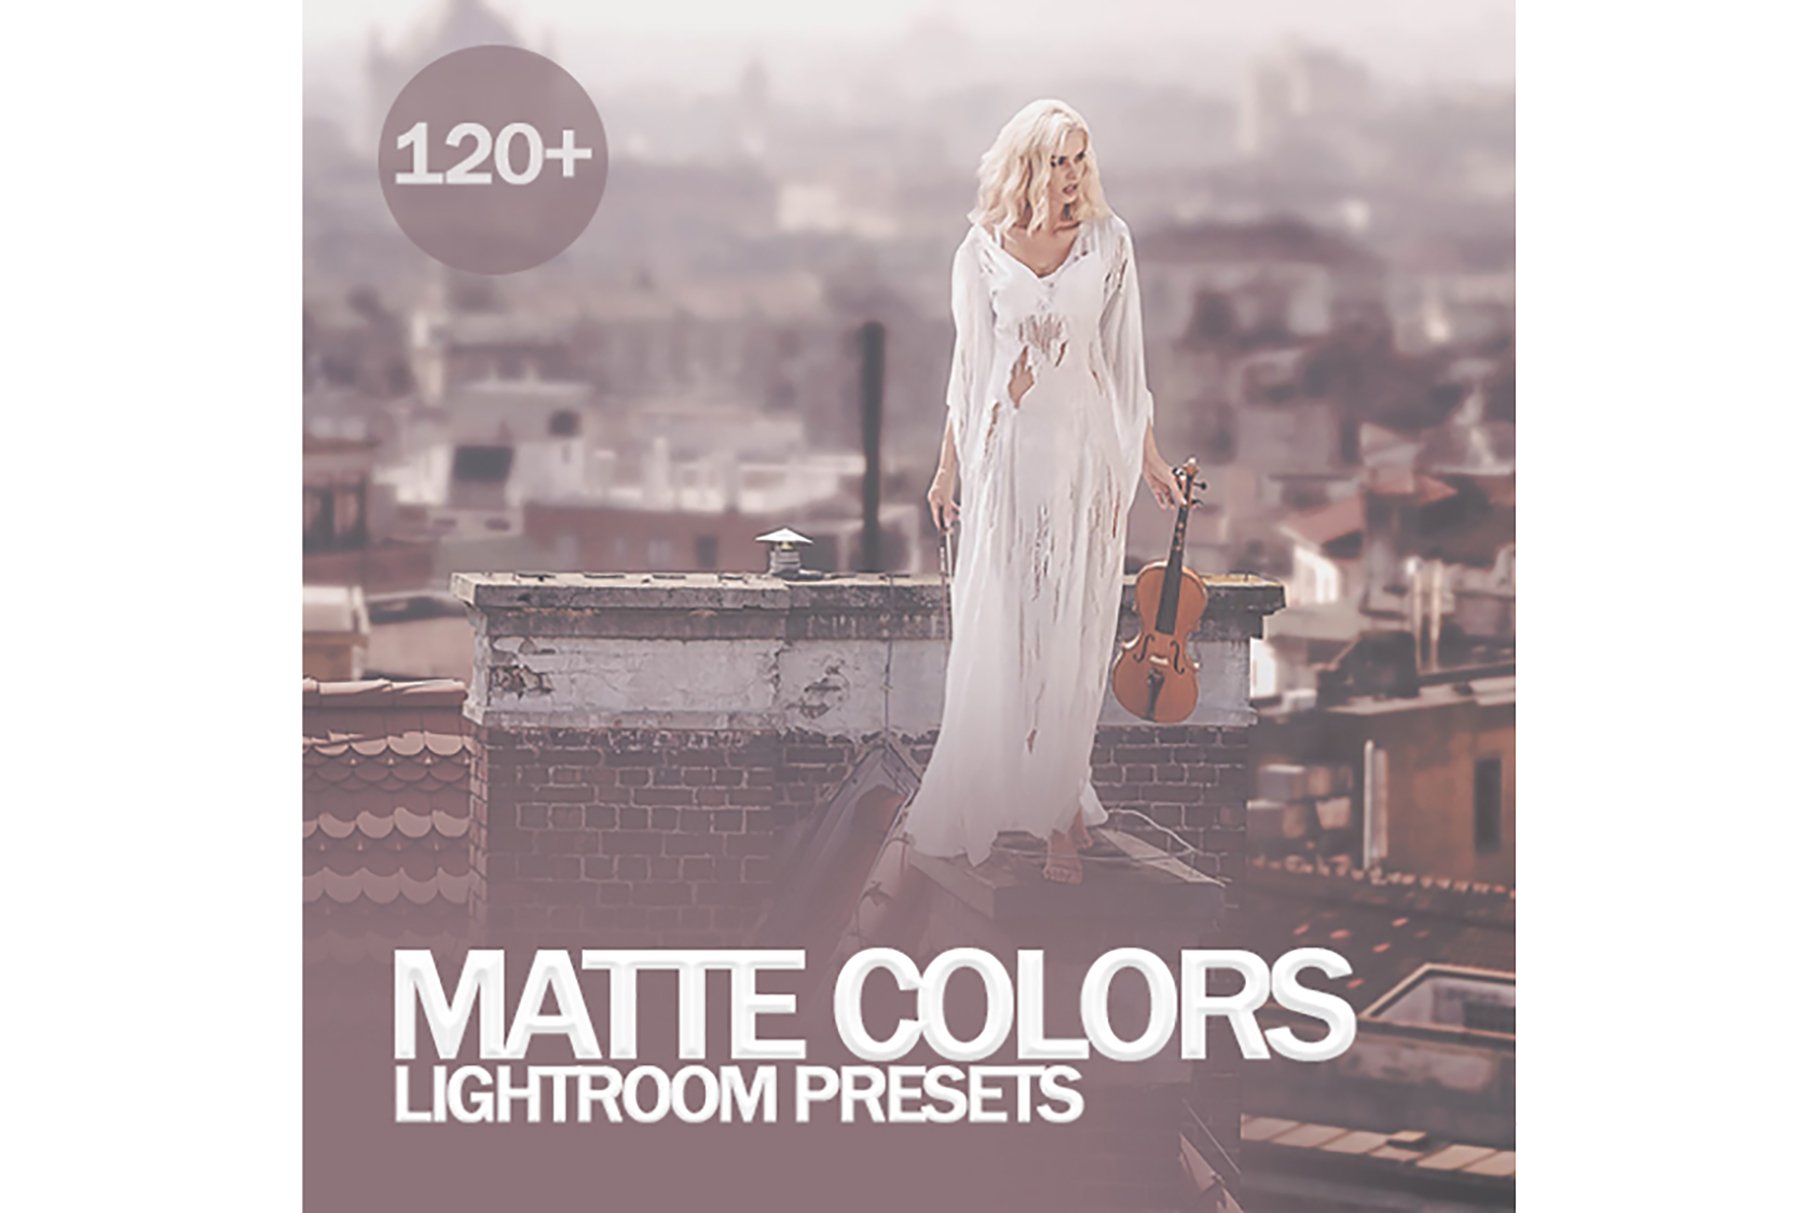 Matte Colors Lightroom Presetscover image.